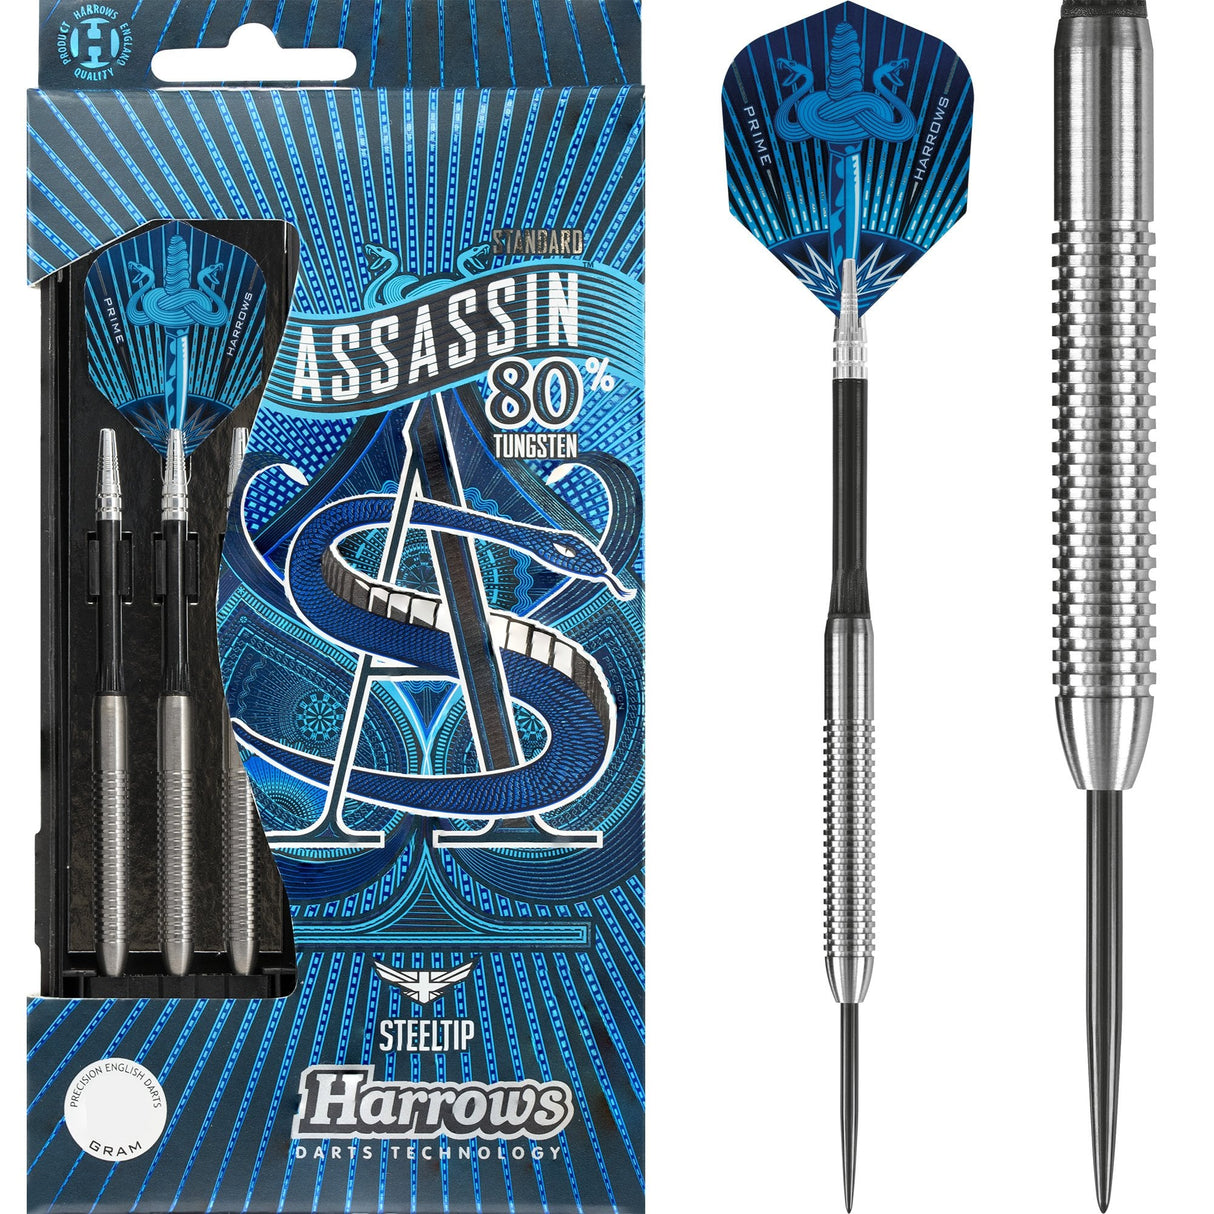 Harrows Assassin Darts - Steel Tip - Std - Ringed - 21g PERS